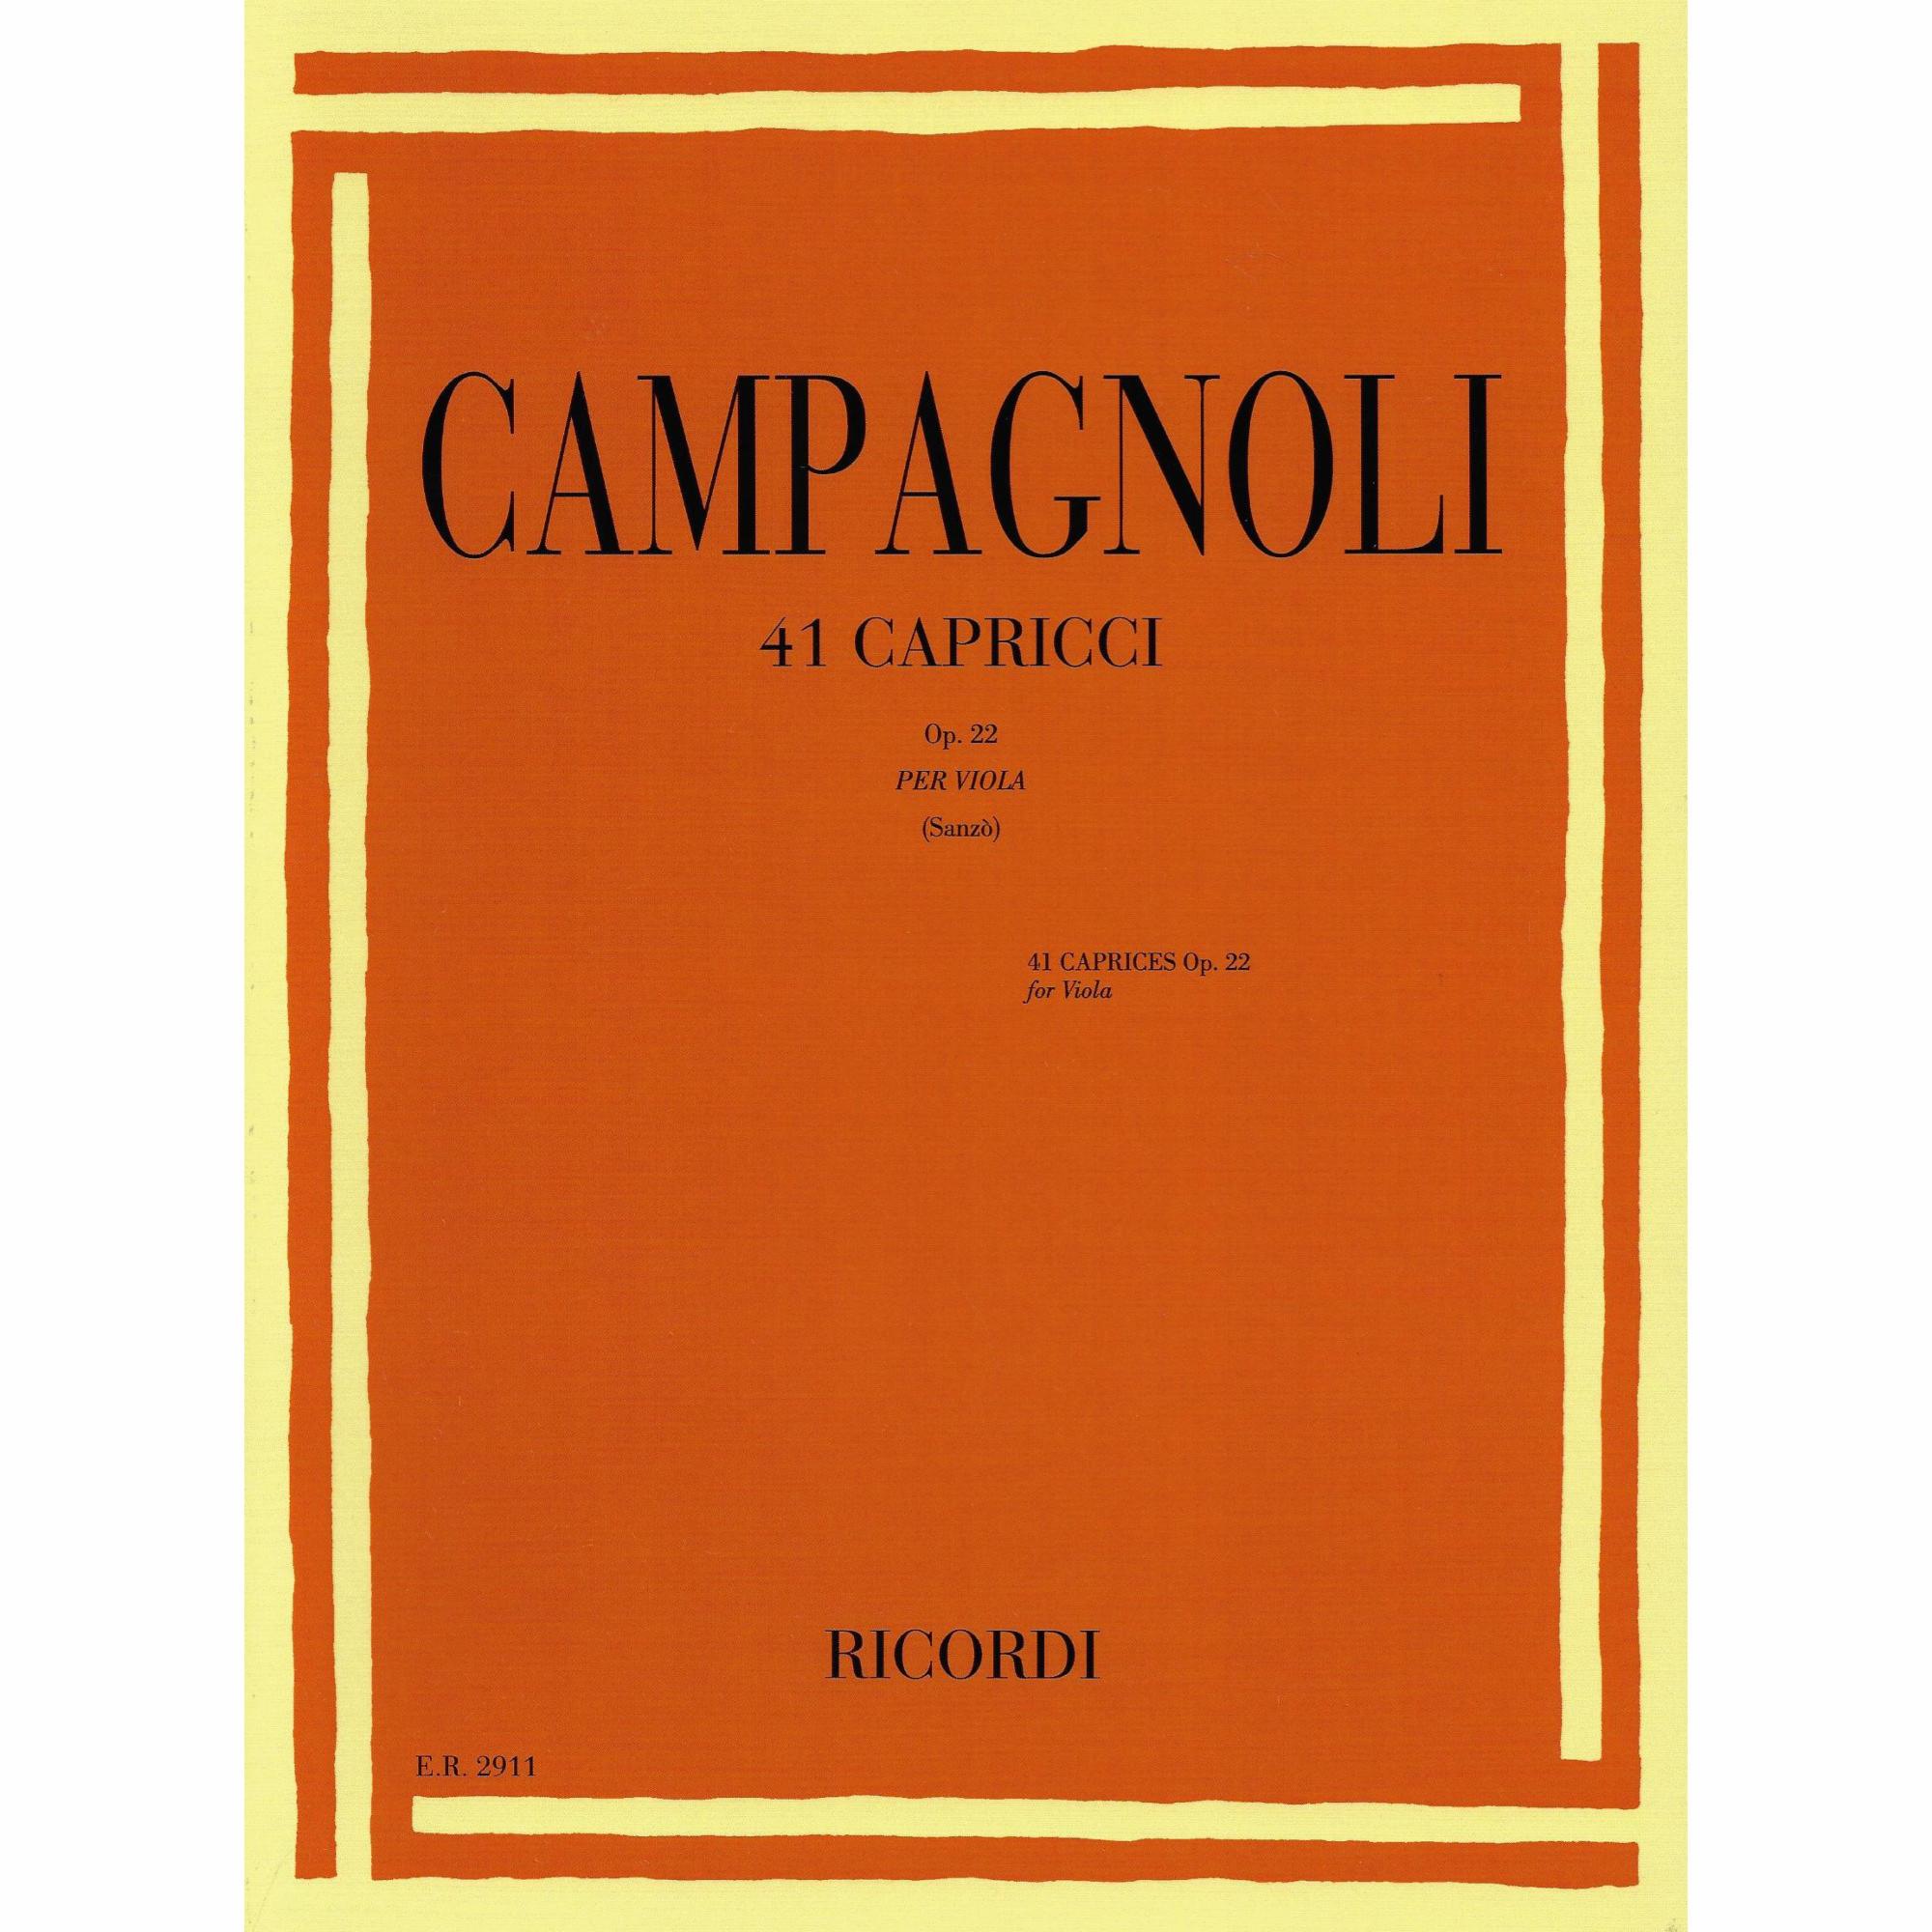 Campagnoli -- 41 Caprices, Op. 22 for Viola